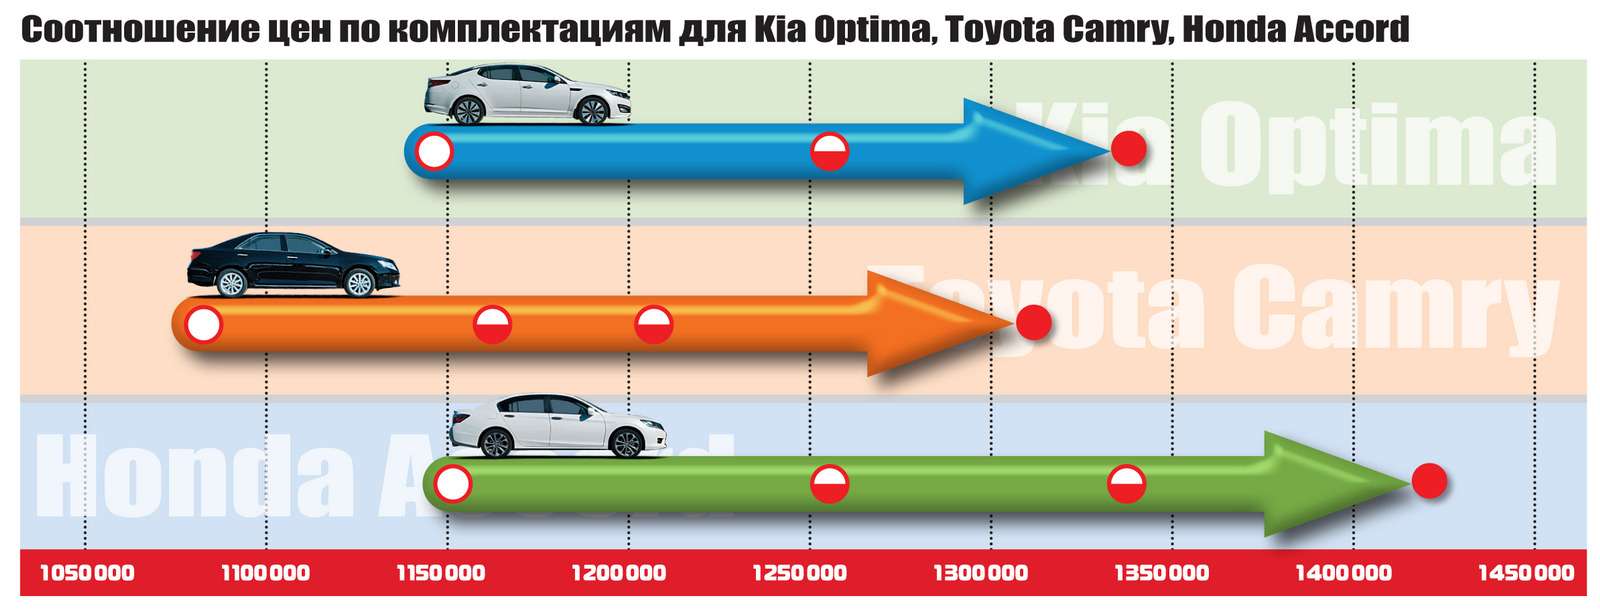 Kia Optima, Toyota Camry и Honda Accord